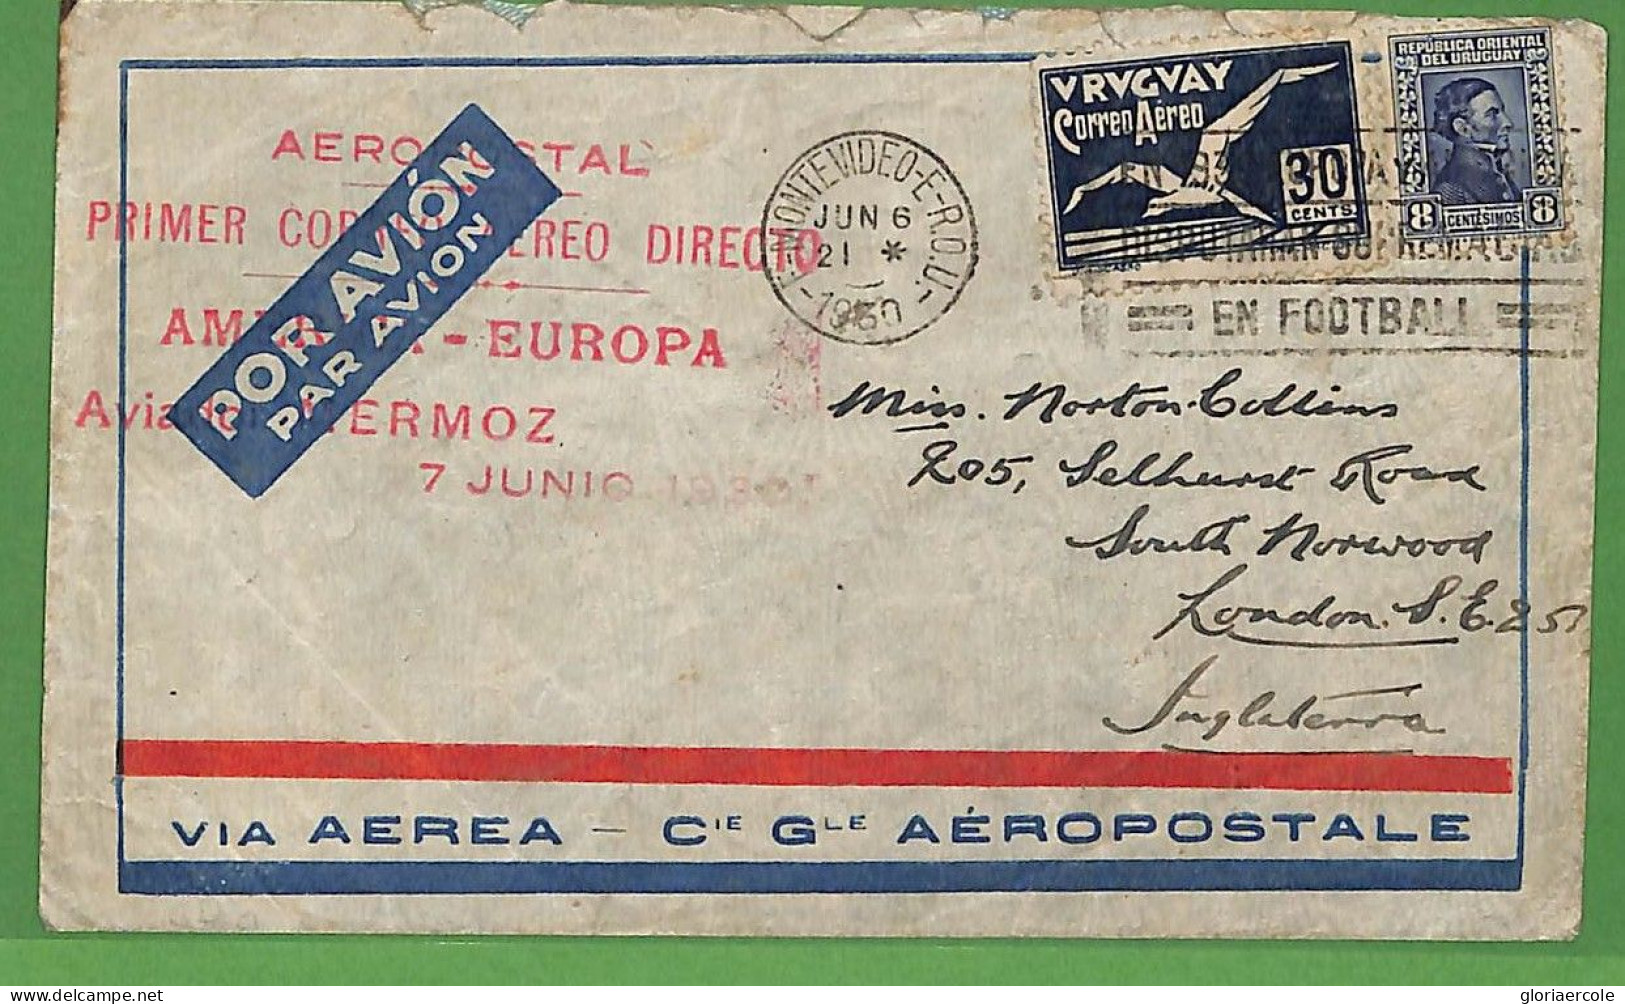 A1187 - URUGUAY  - POSTAL HISTORY - Rare MERMOZ Flight With FOOTBALL Postmark! - Unused Stamps